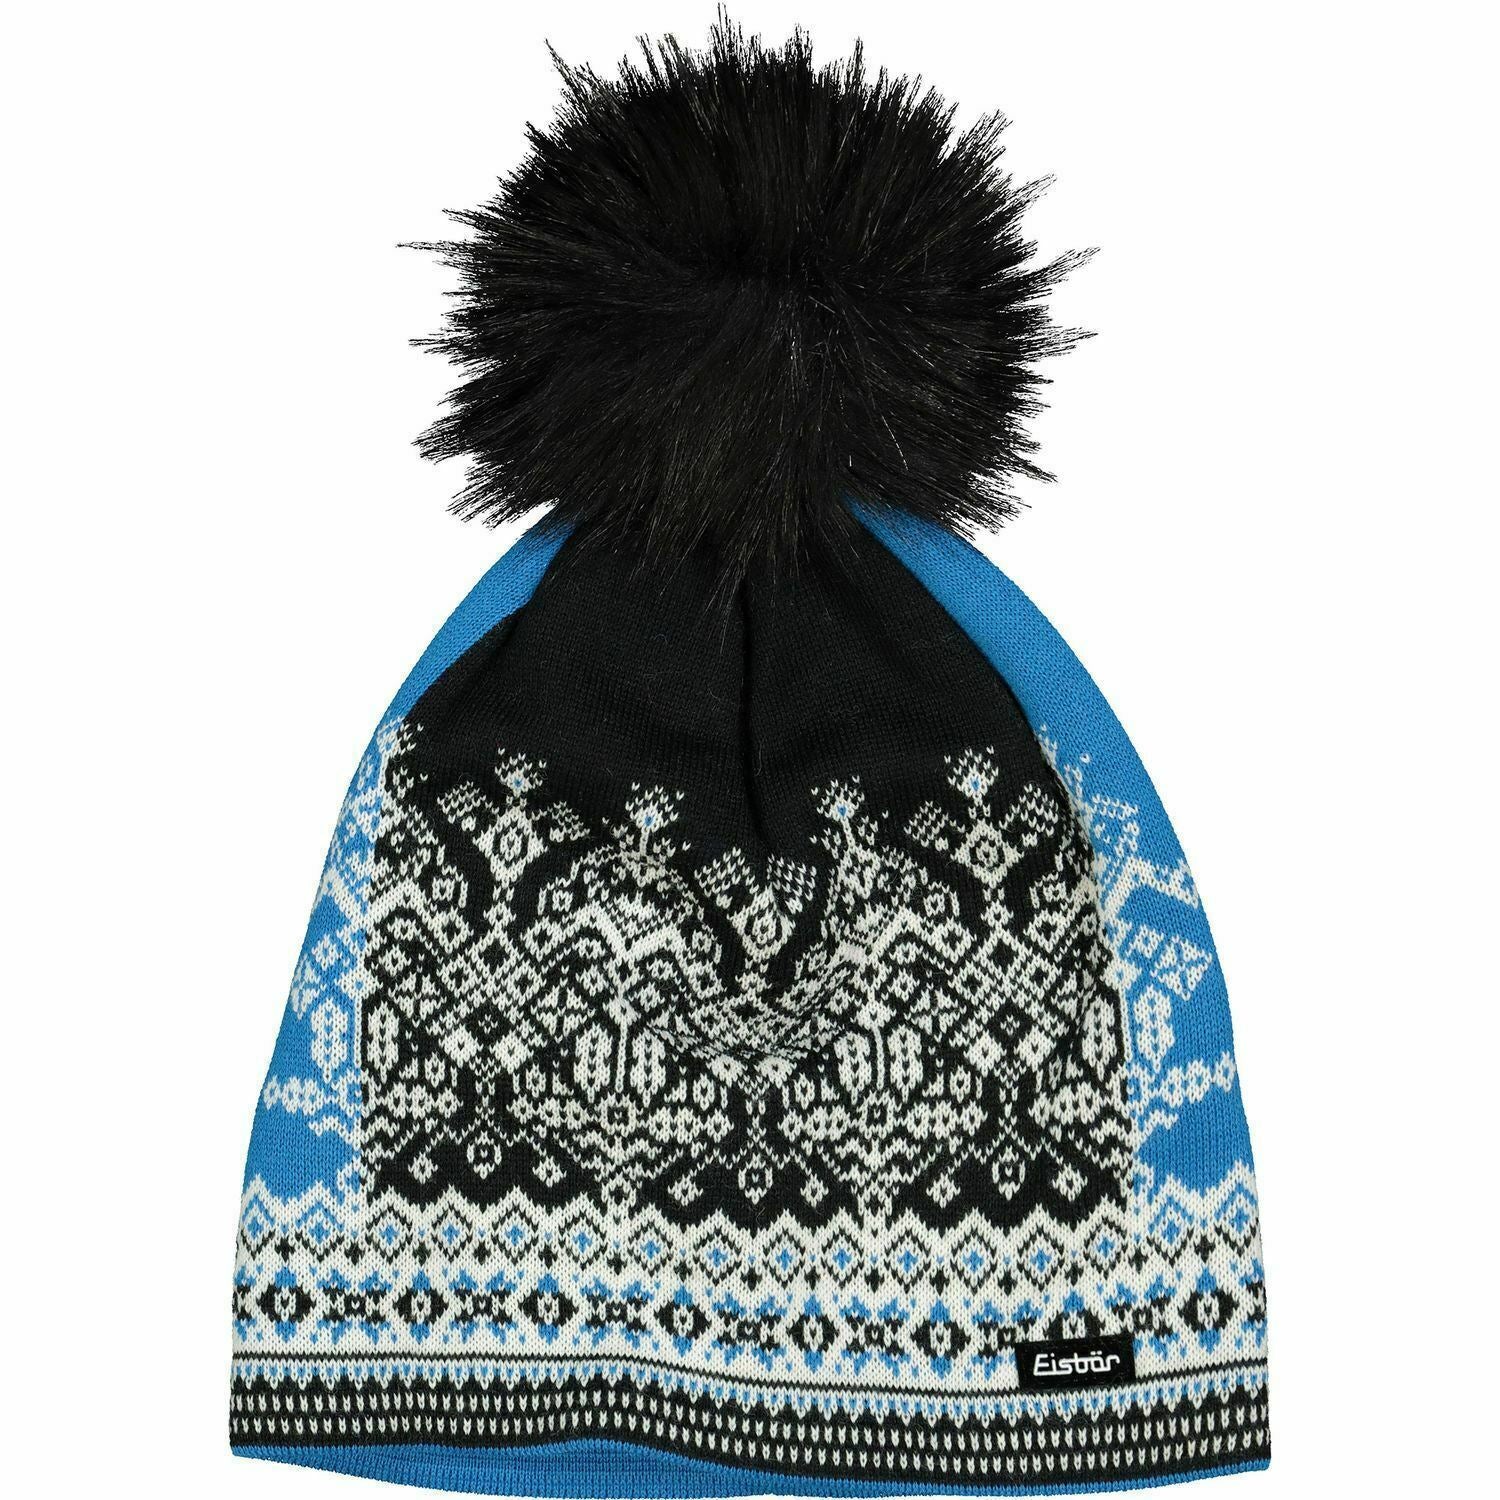 Mens EISBAR Ski Hat Winter Beanie Hat Merino Wool Mix Black/Blue One Size Adult